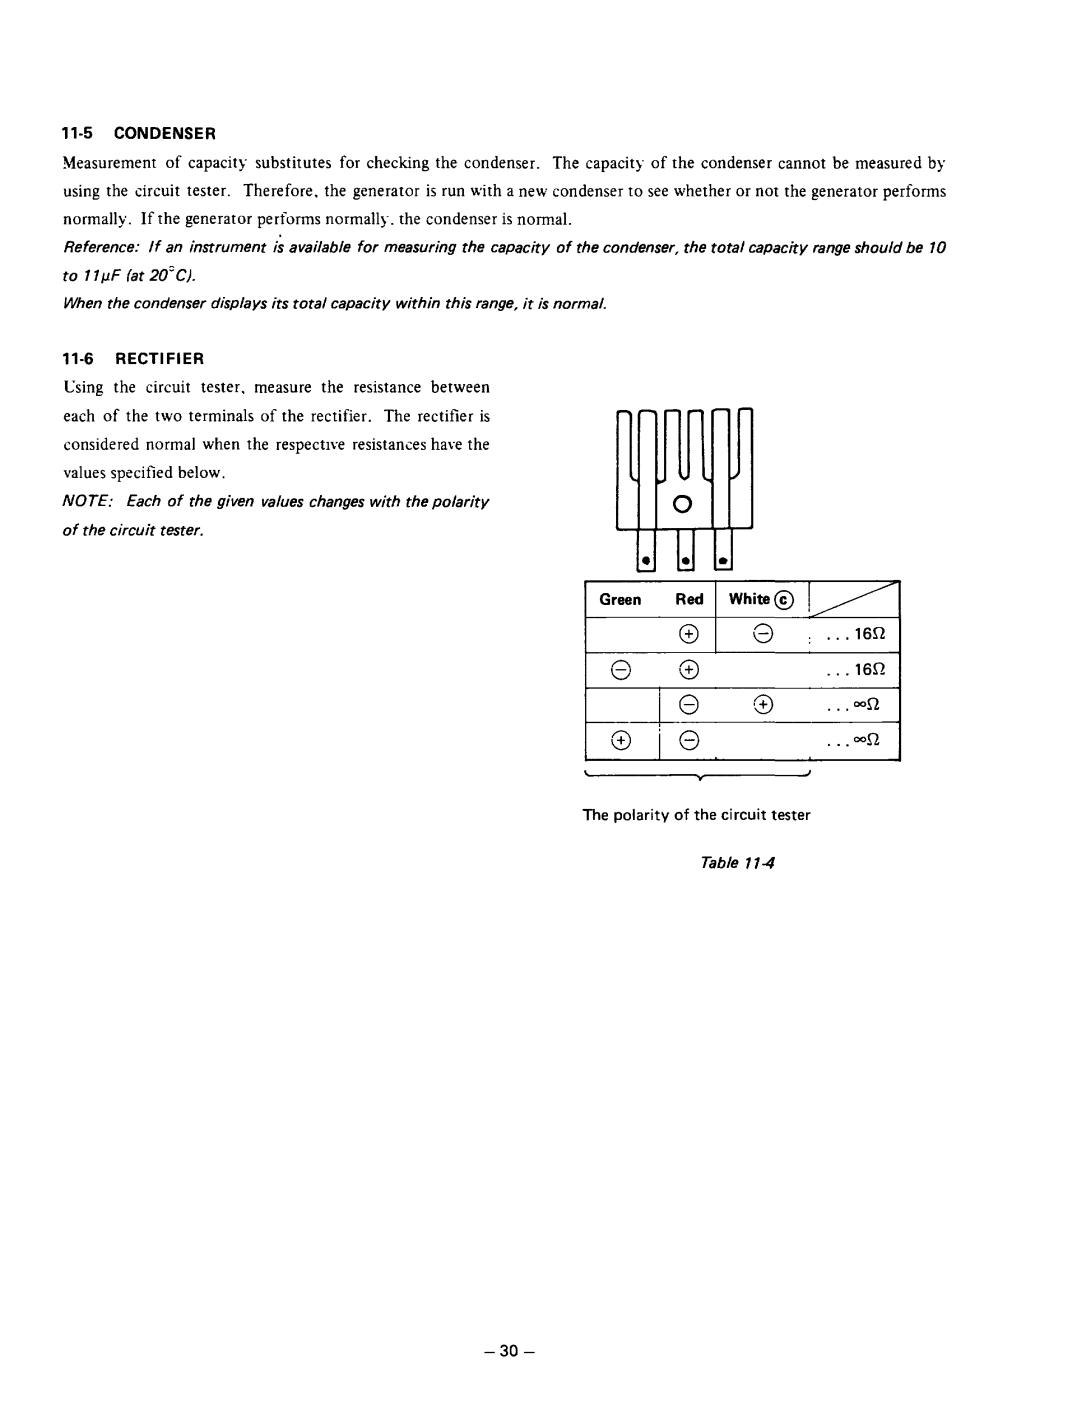 Subaru Robin Power Products R600 manual 11-5CONDENSER, 11-6RECTIFIER 